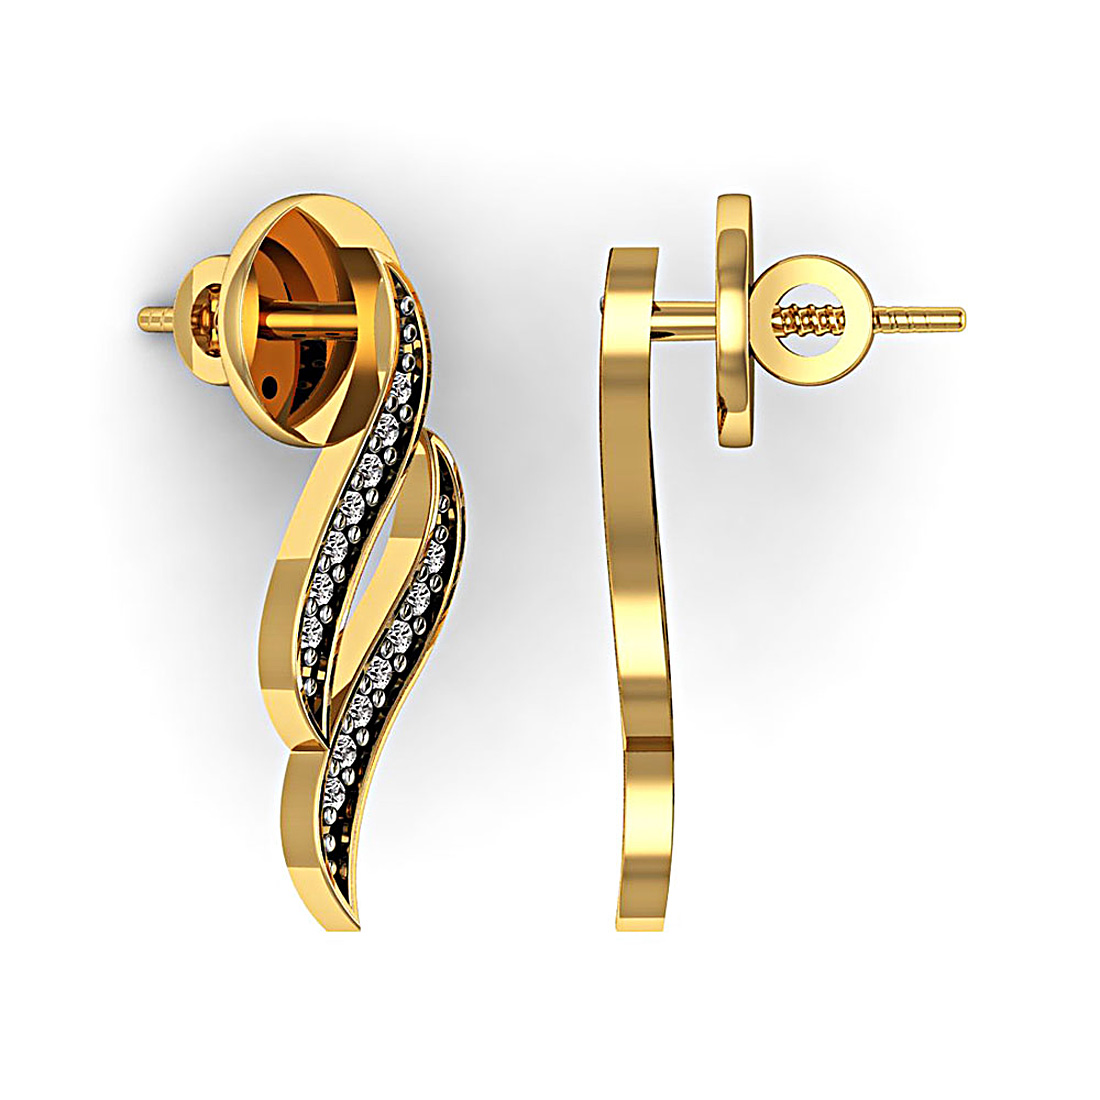 18k solid gold leaf shape stud earrings with genuine diamond